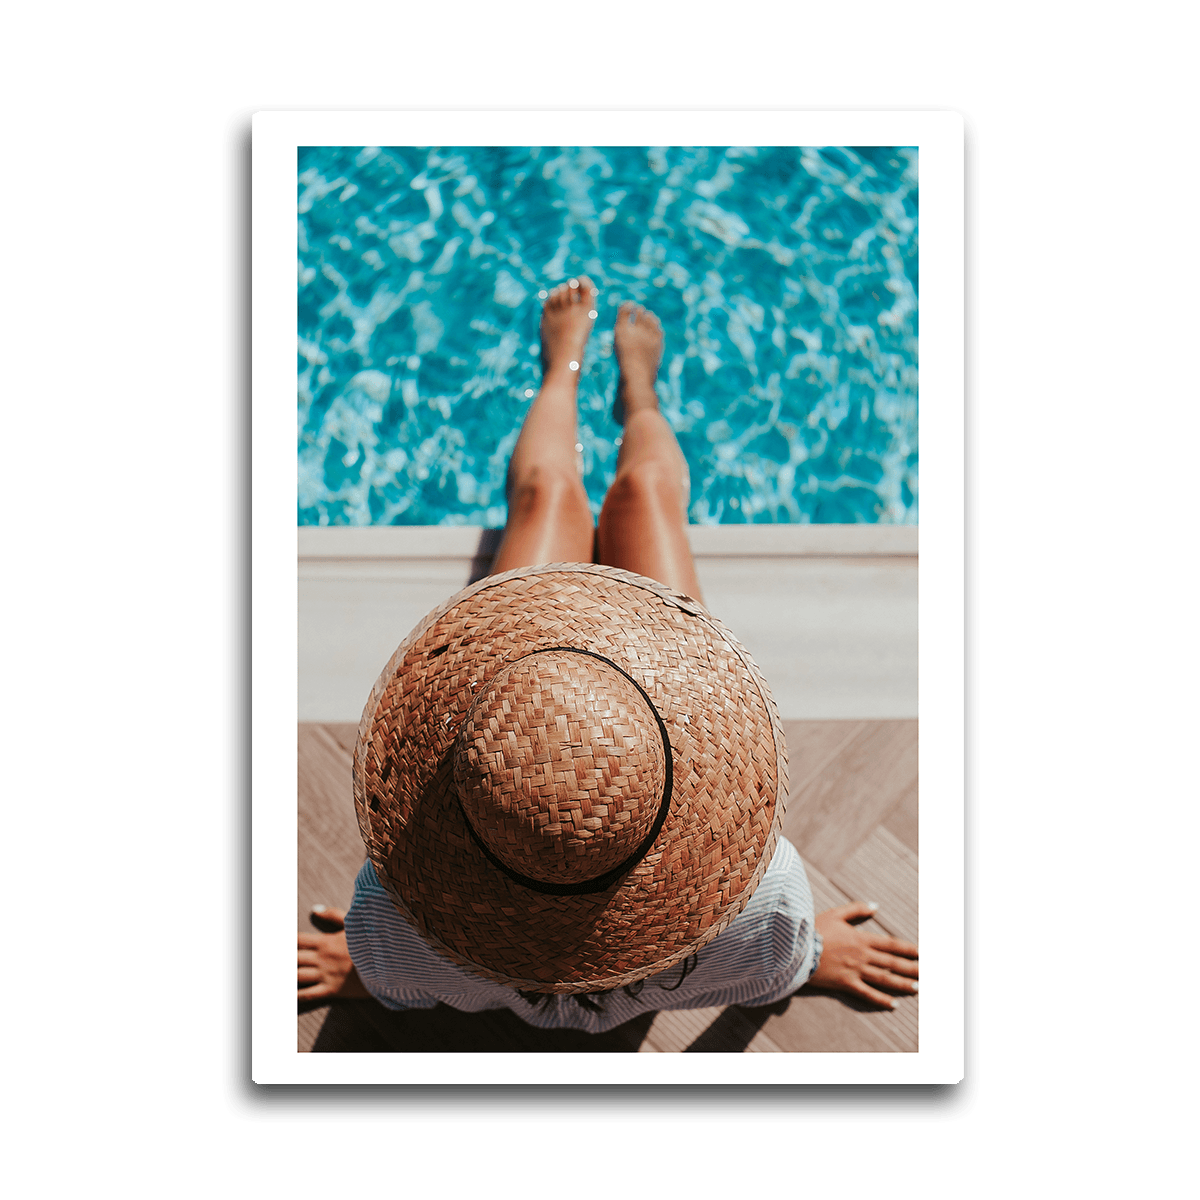 Summer Serenity: Poolside Leisure - PixMagic